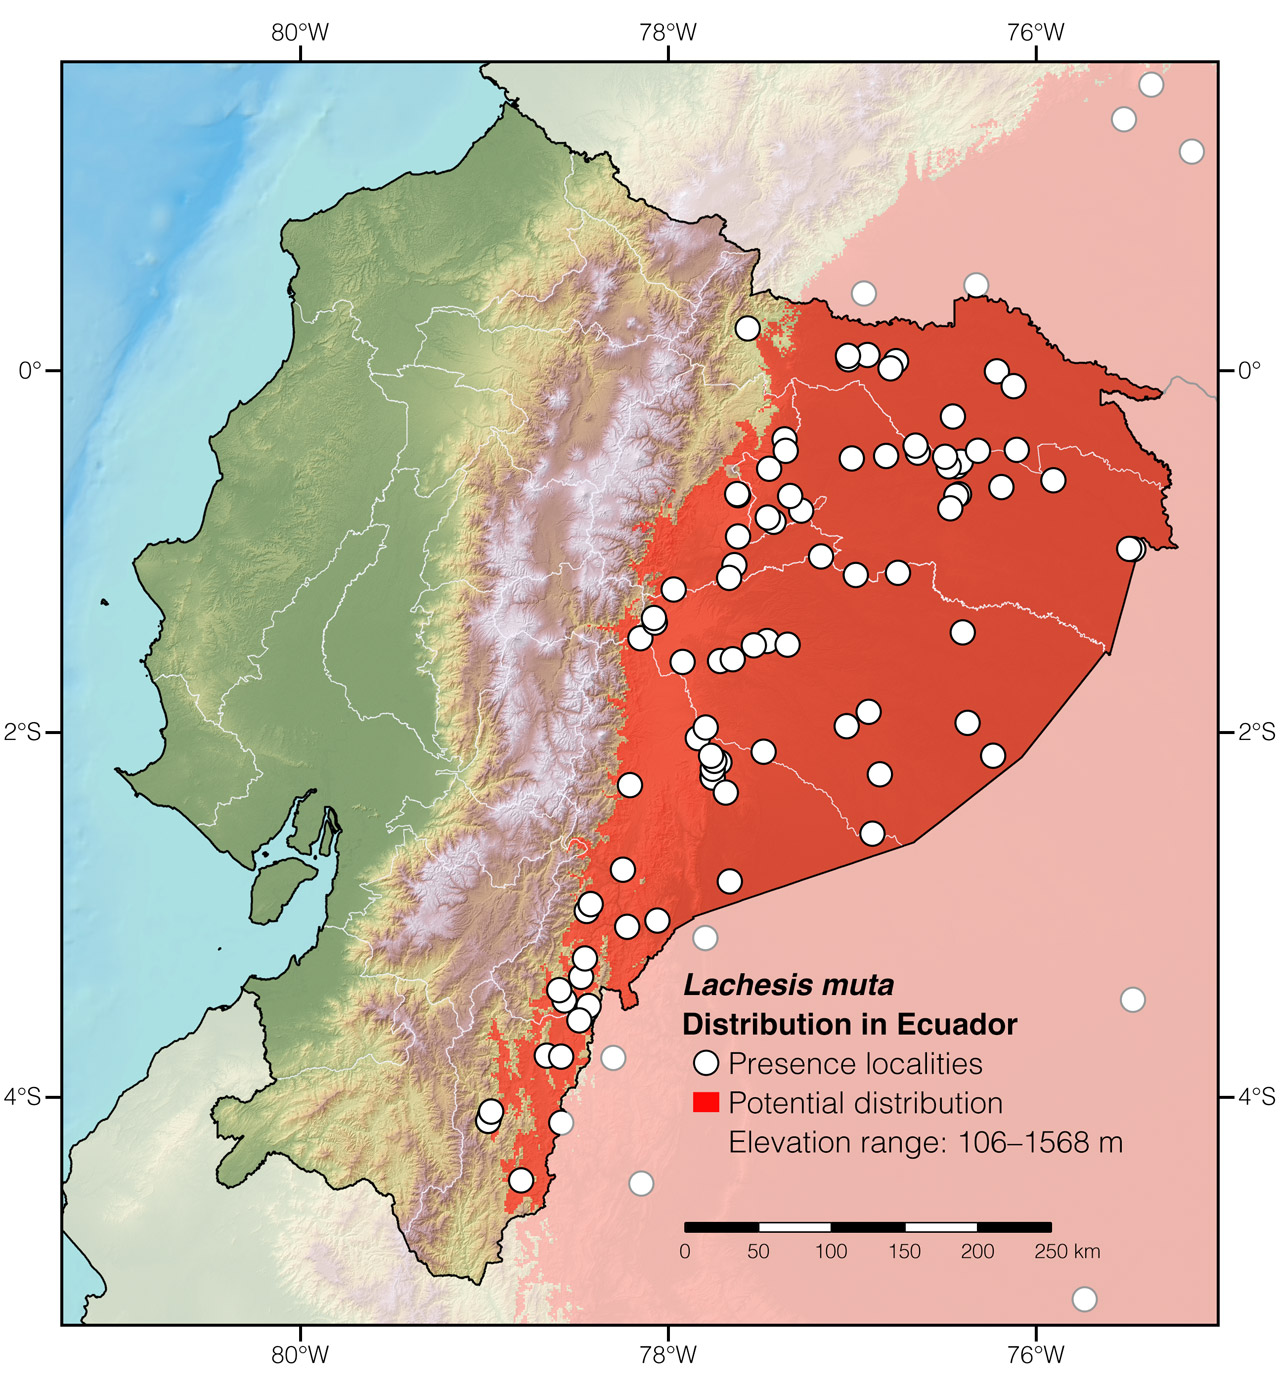 Distribution of Lachesis muta in Ecuador